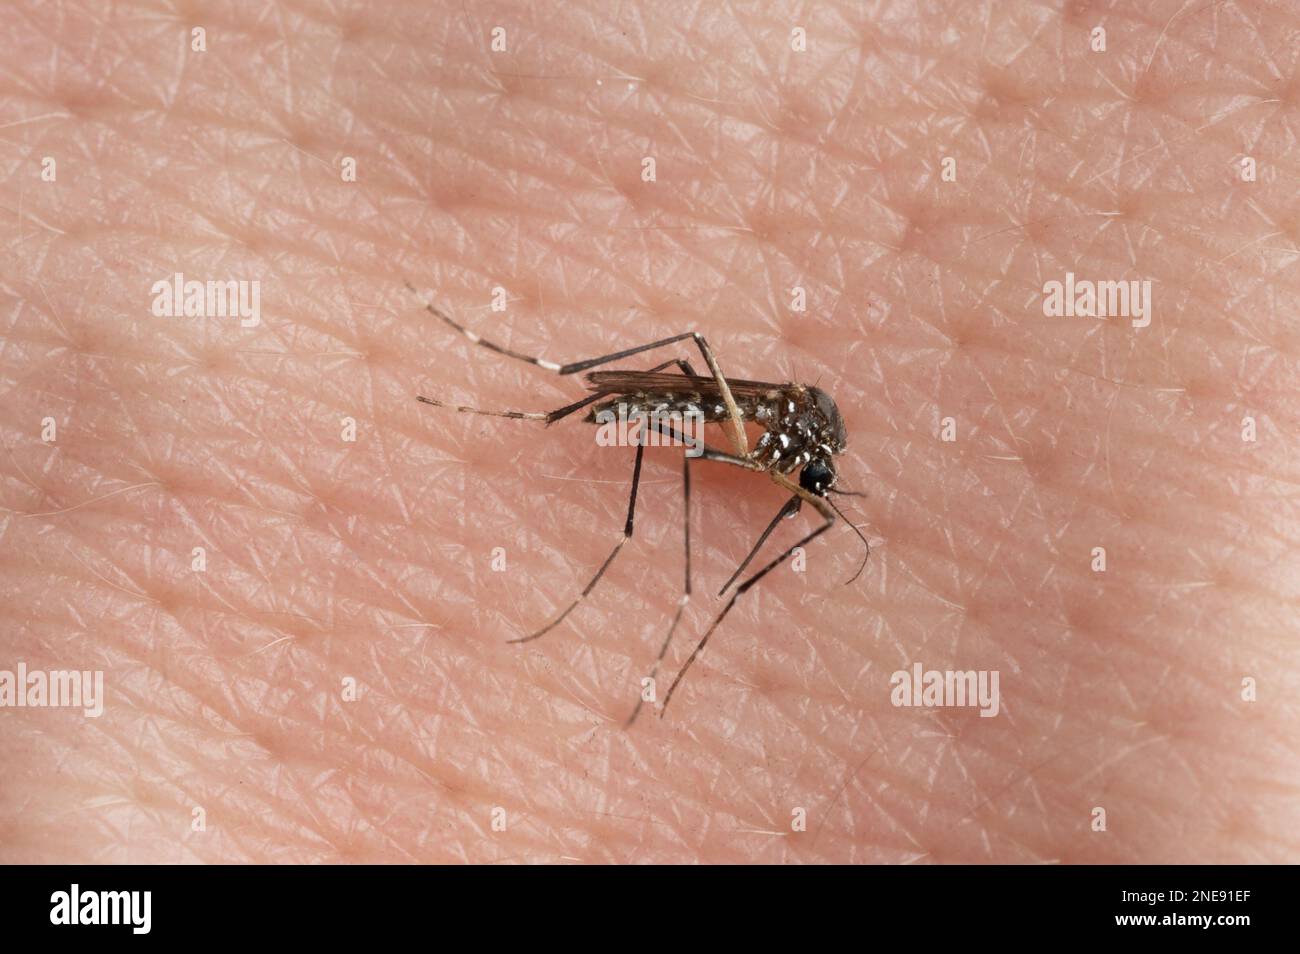 Malaria zanzara sulla pelle umana sfondo macro vista ravvicinata Foto Stock